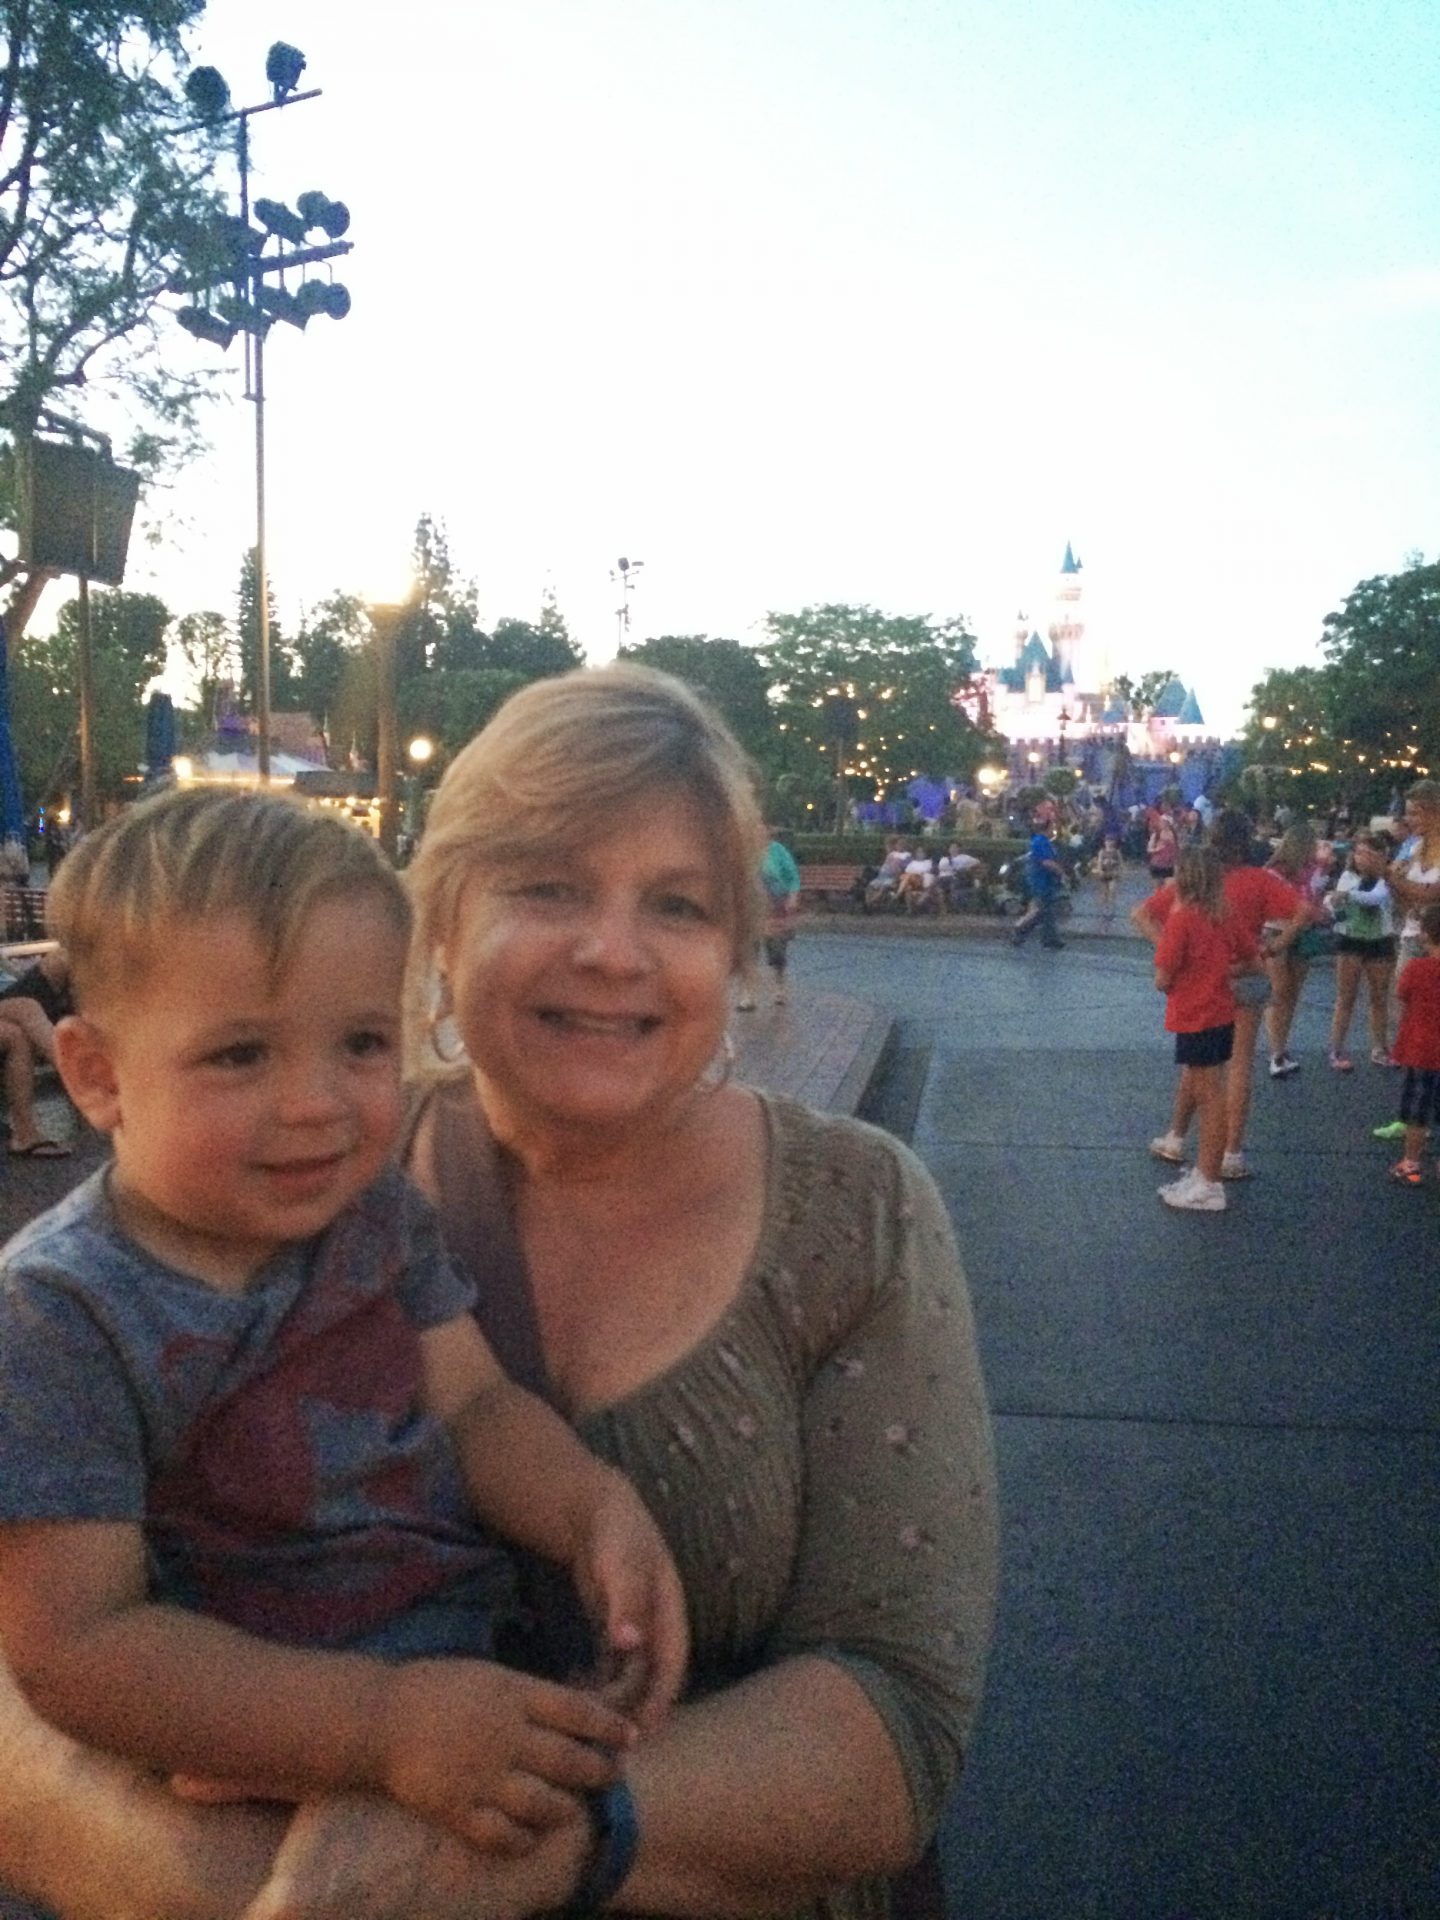 Ruta and Milo - Disneyland - April 2014